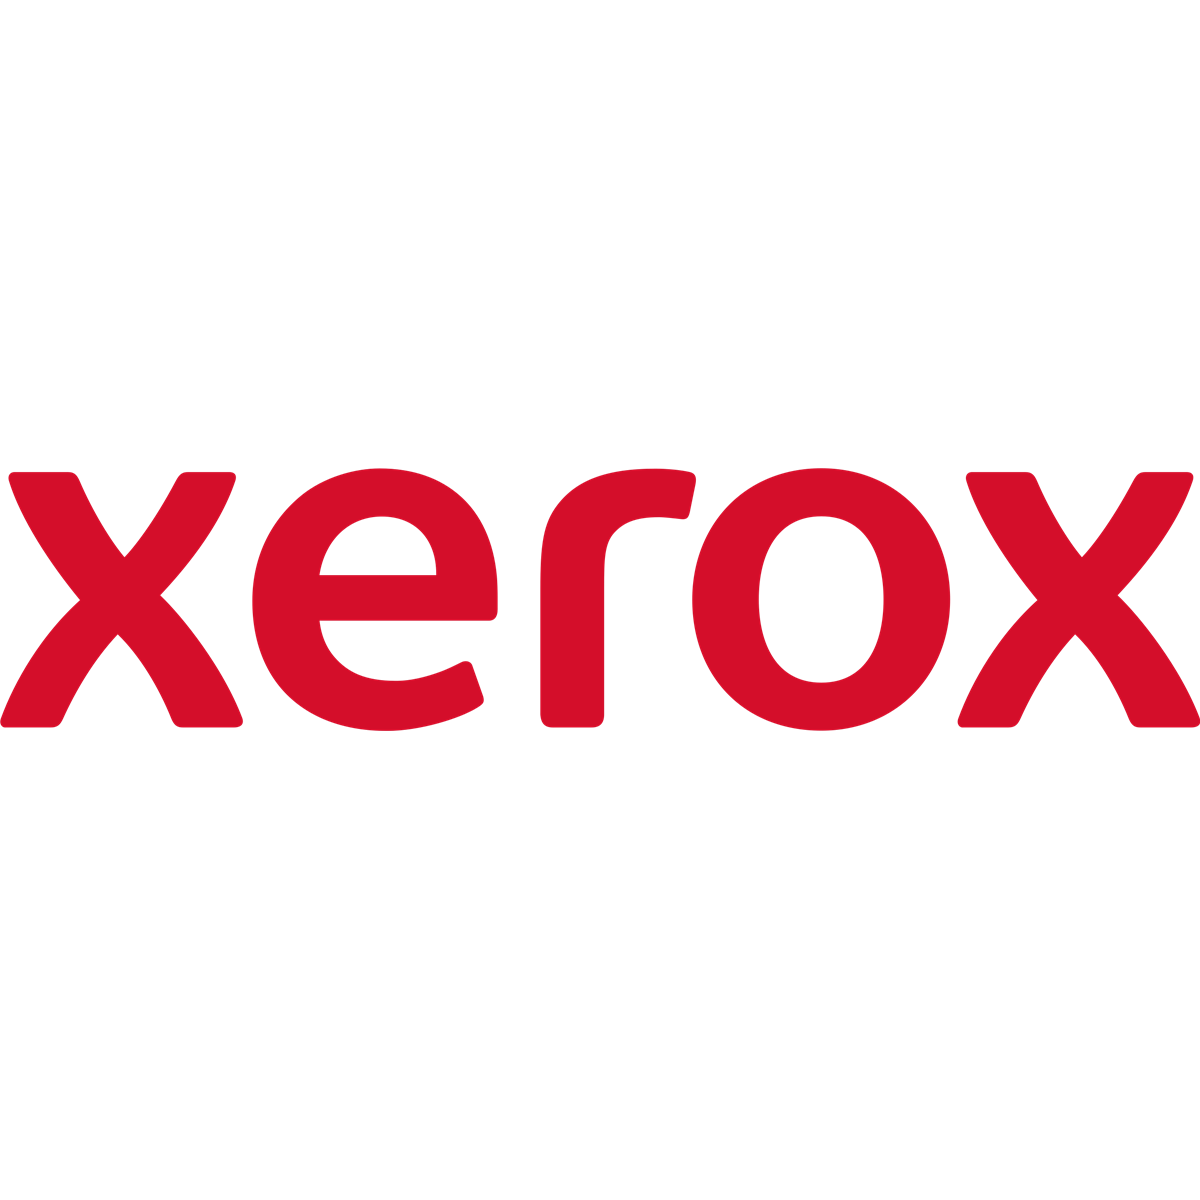 Xerox f. DocuColor 1632/2240 - C32/40 - 3535 - M24 - 3.49 kg - 241 x 579 x 210 mm